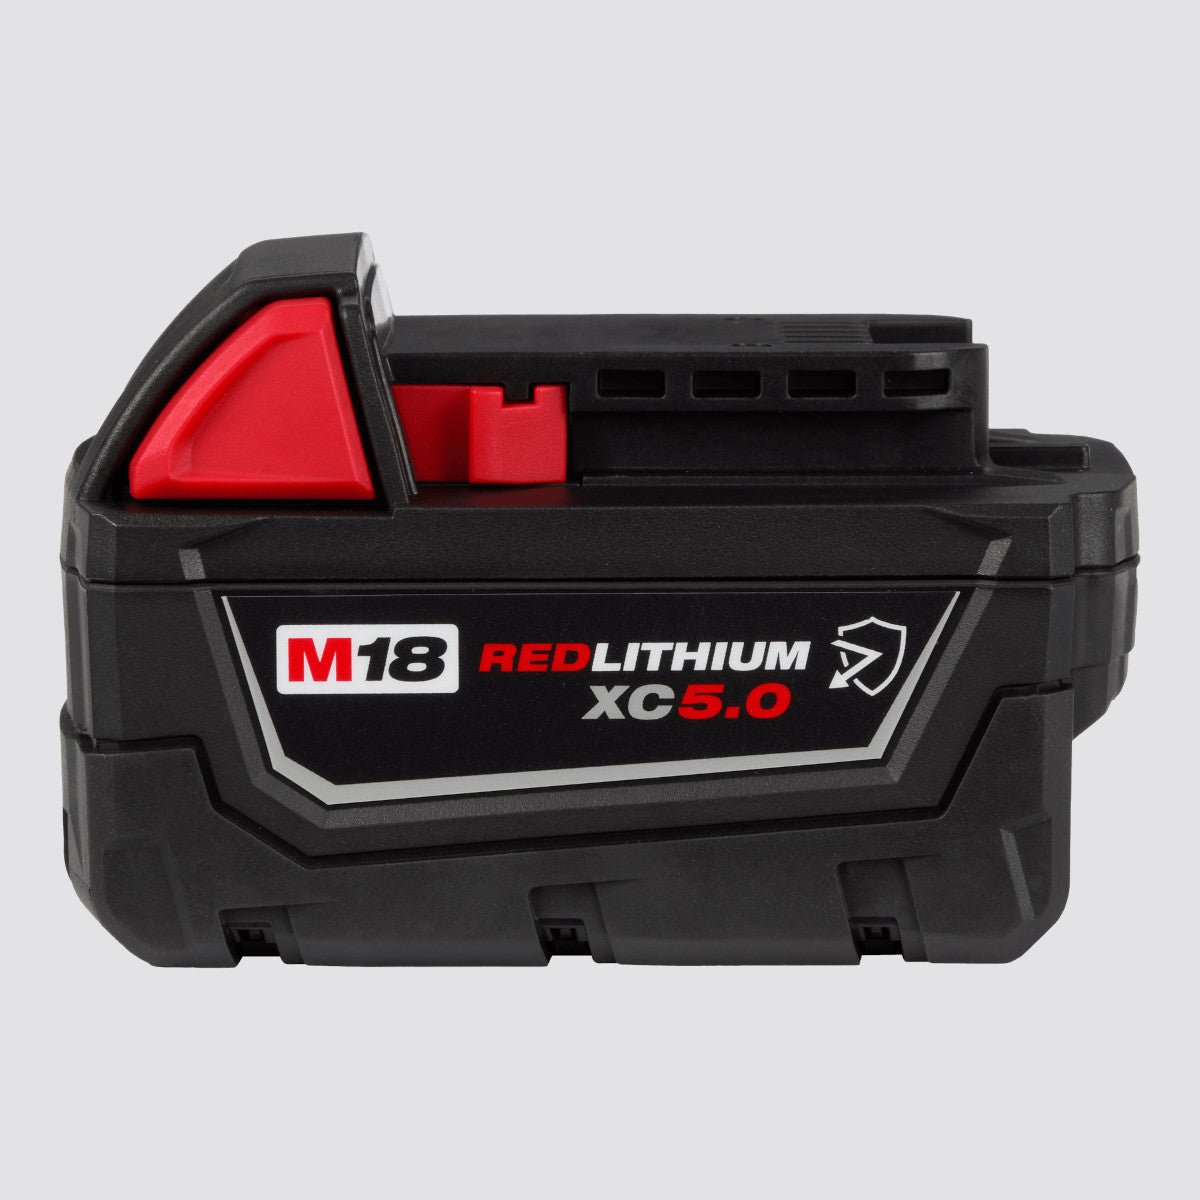 Milwaukee 48-11-1850R M18™ REDLITHIUM™ XC5.0 Resistant Battery